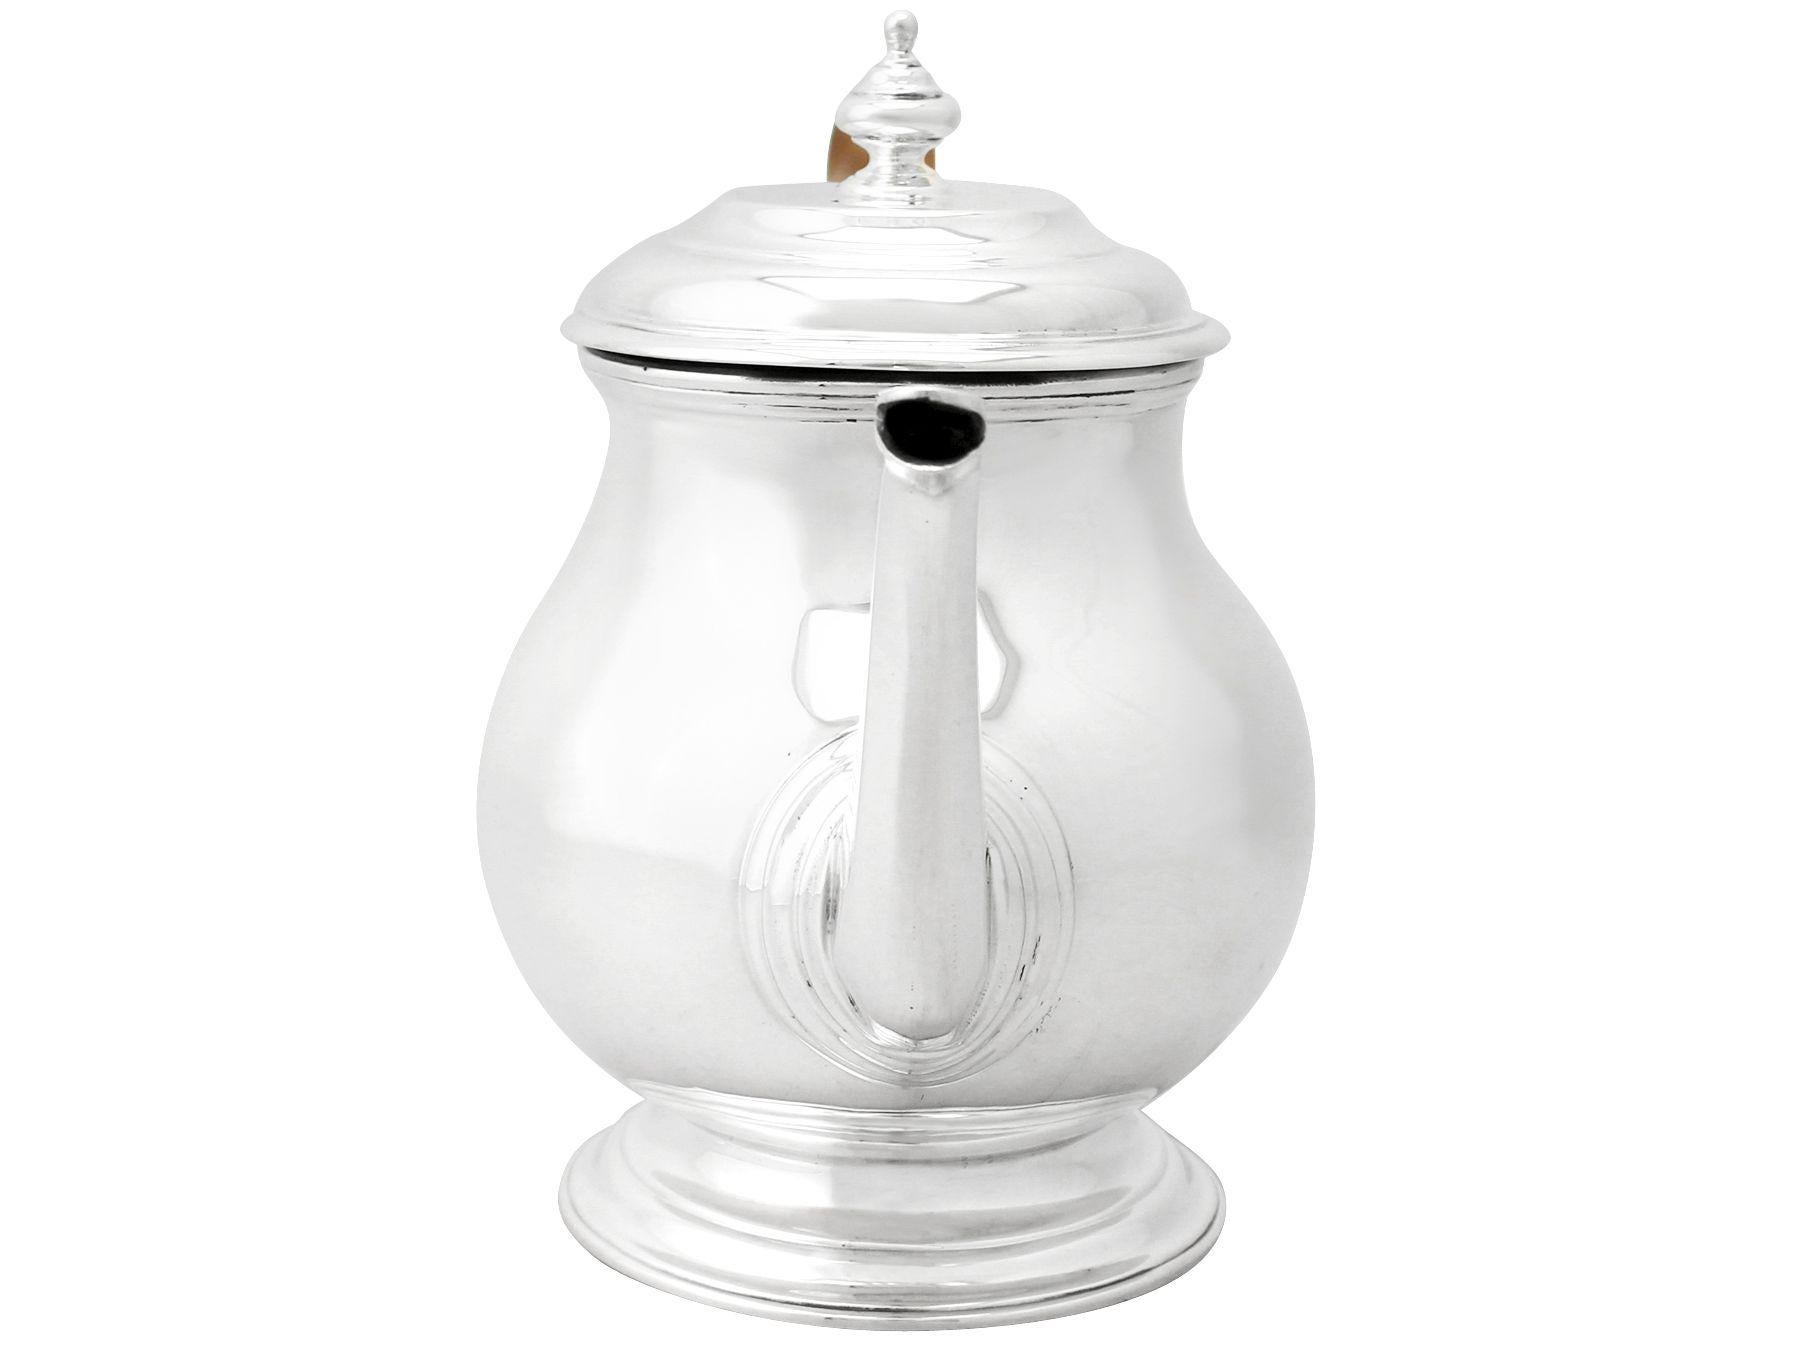 i.s. co silver teapot